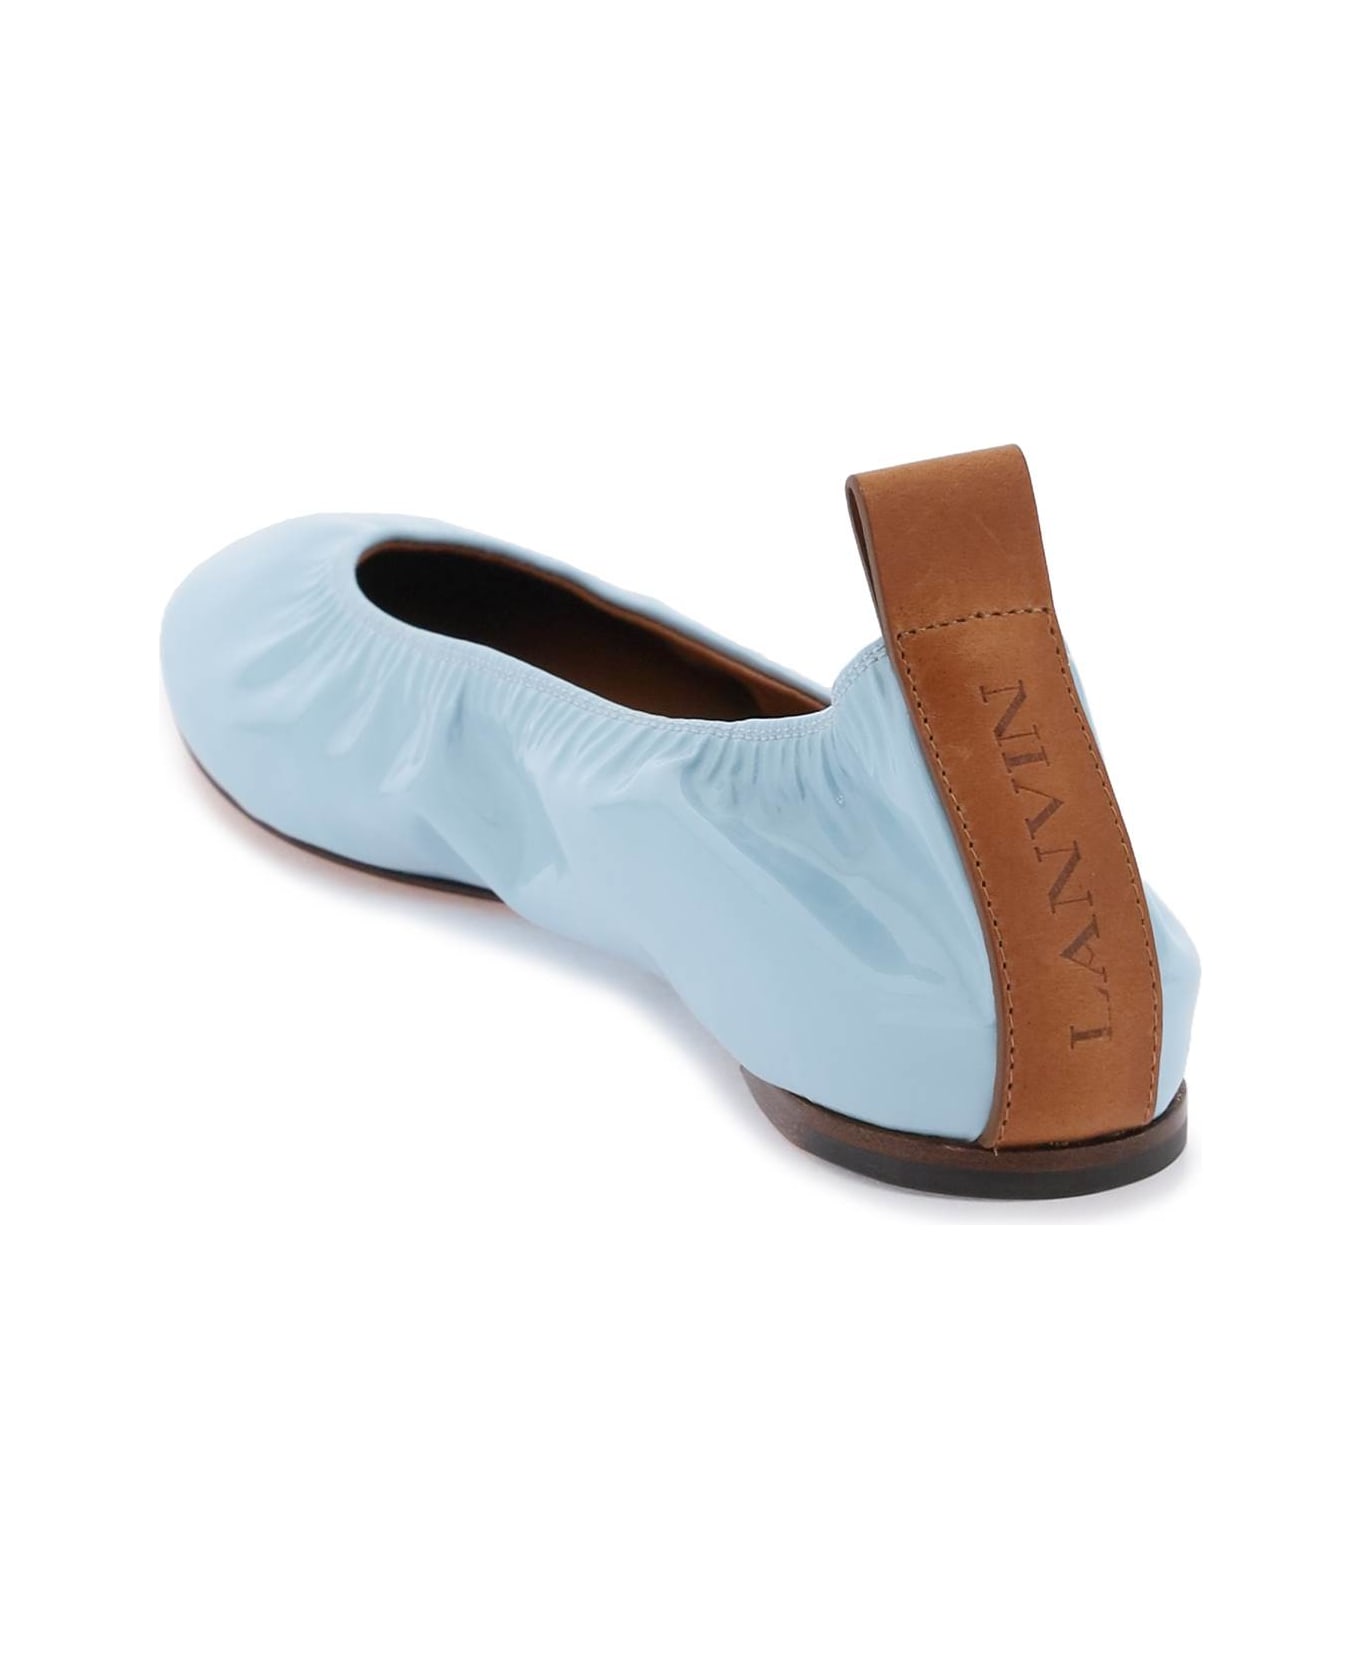 Lanvin The Ballerina Flat In Patent Leather - LANVIN BLUE (Light blue)